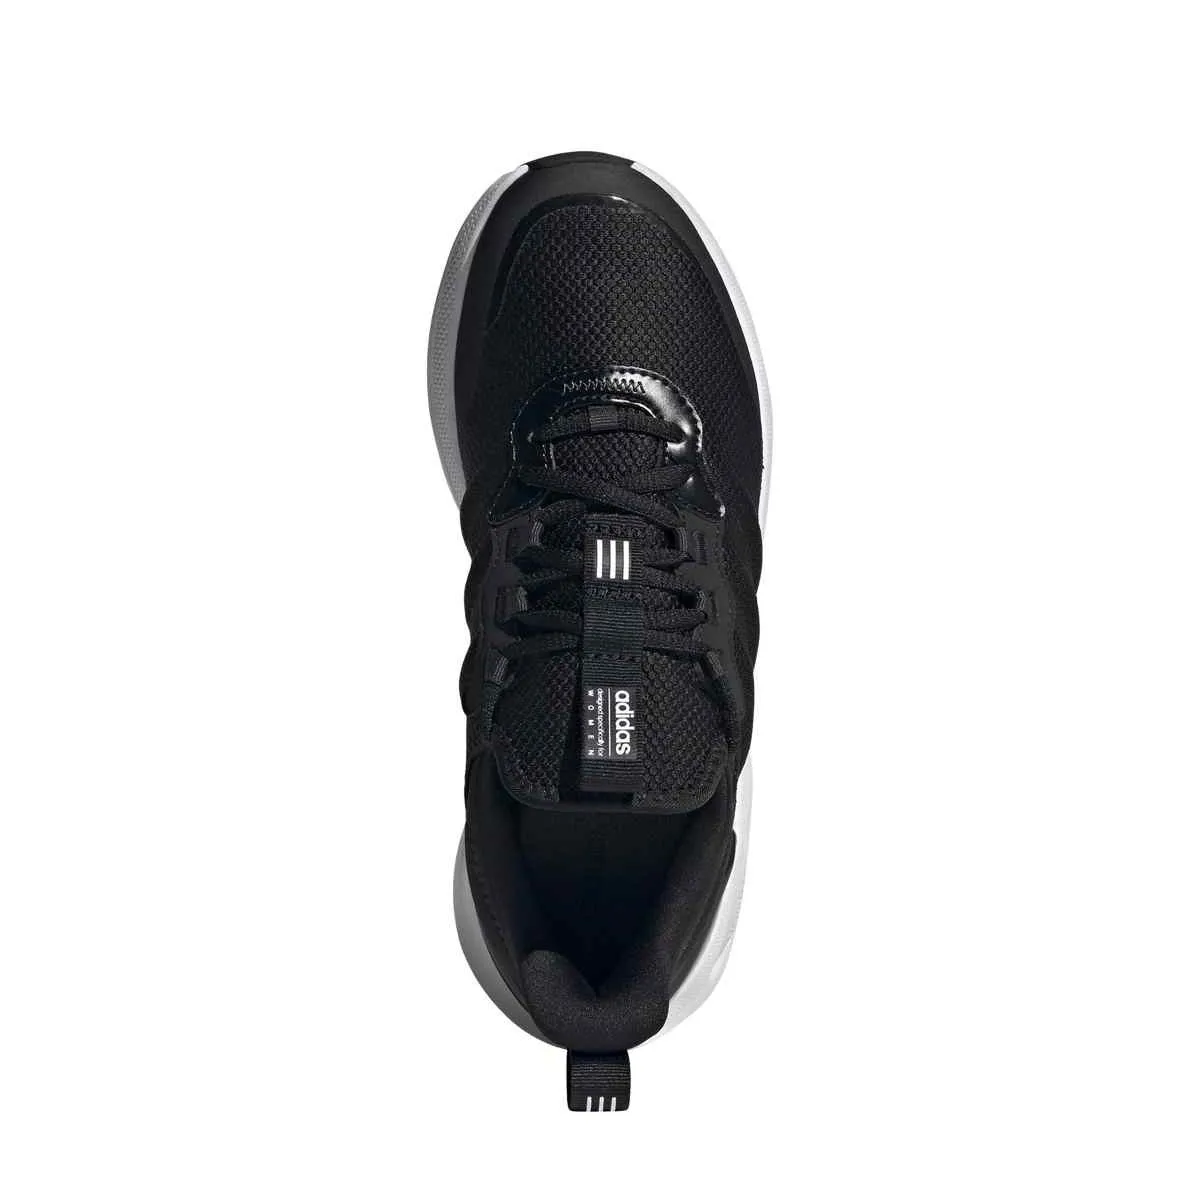 adidas Purecomfort sports shoes black/white